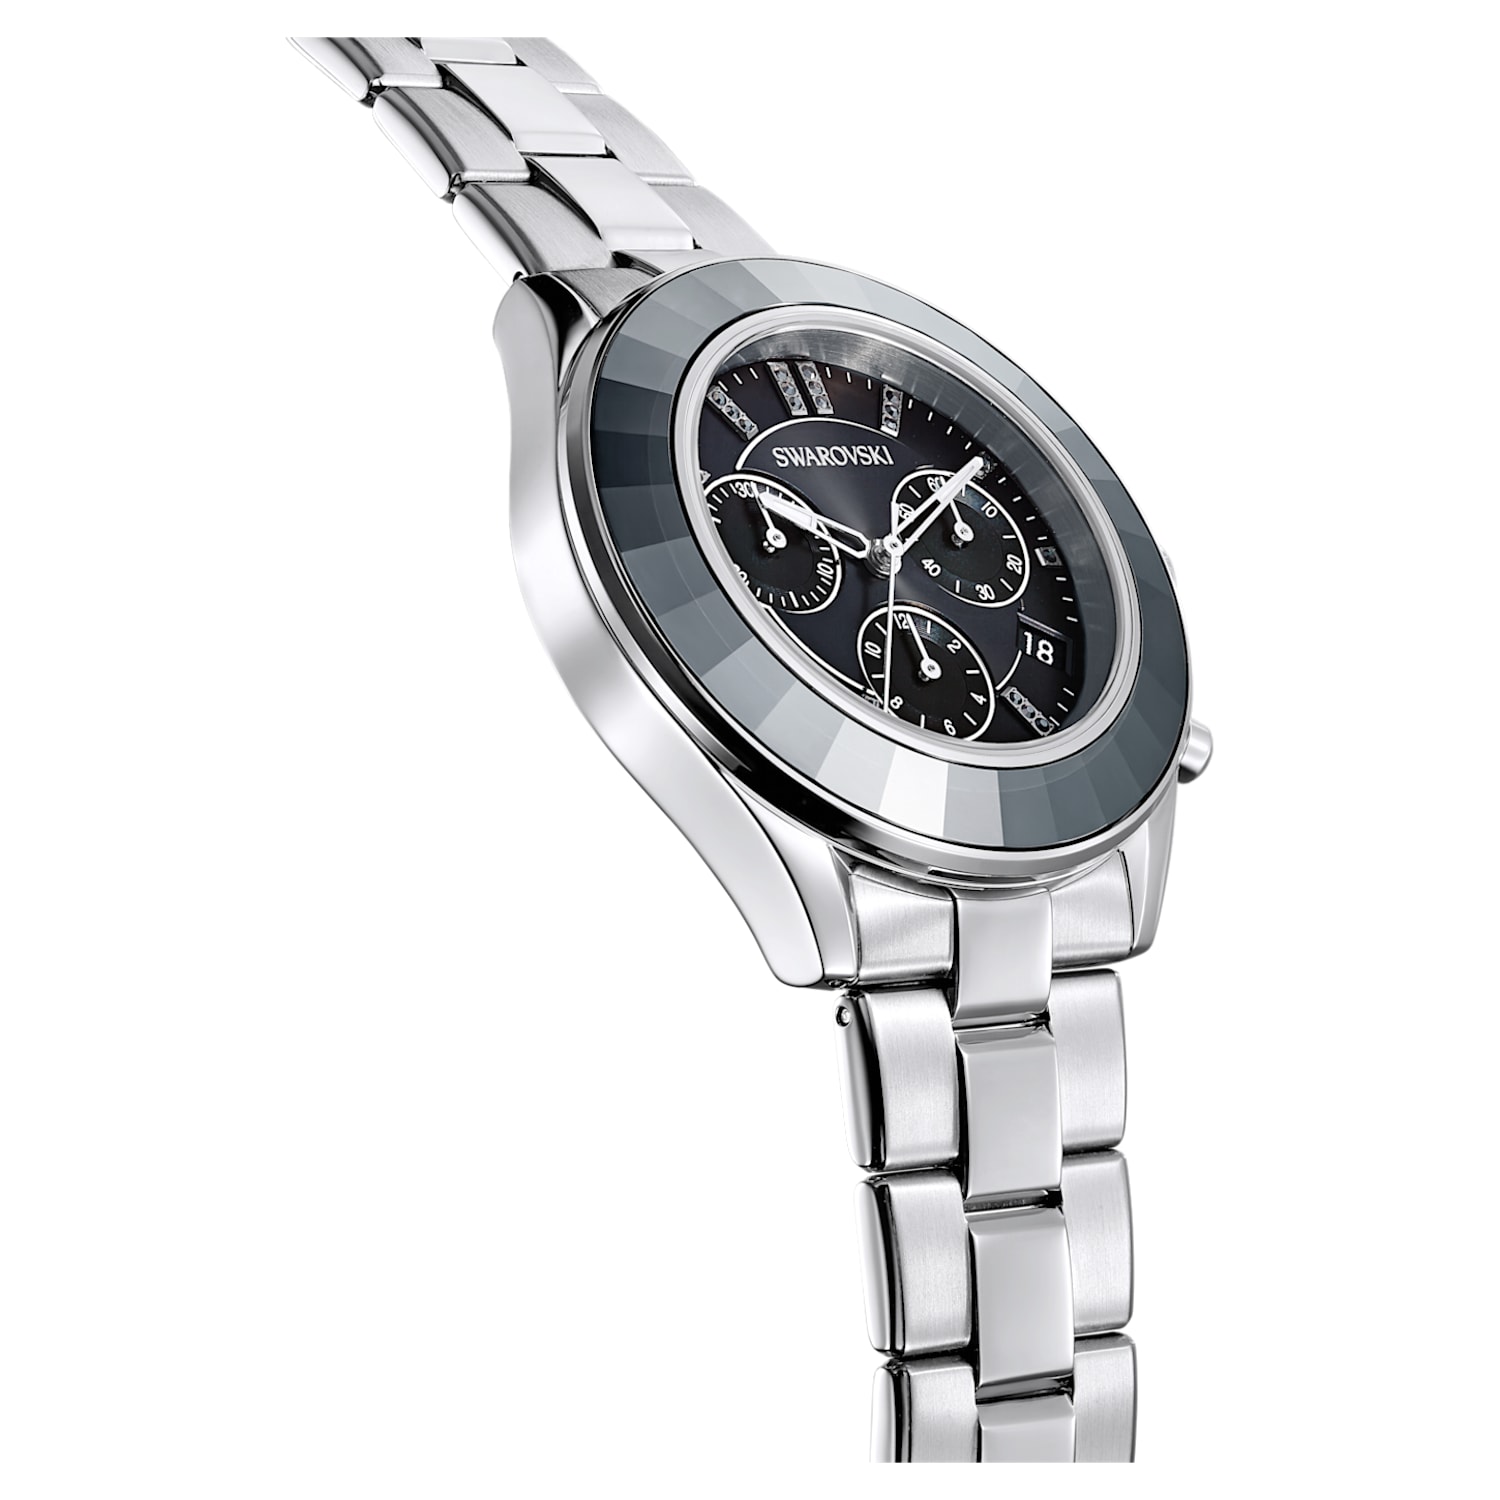 Octea Lux Sport watch, Metal bracelet, Black, Stainless steel 